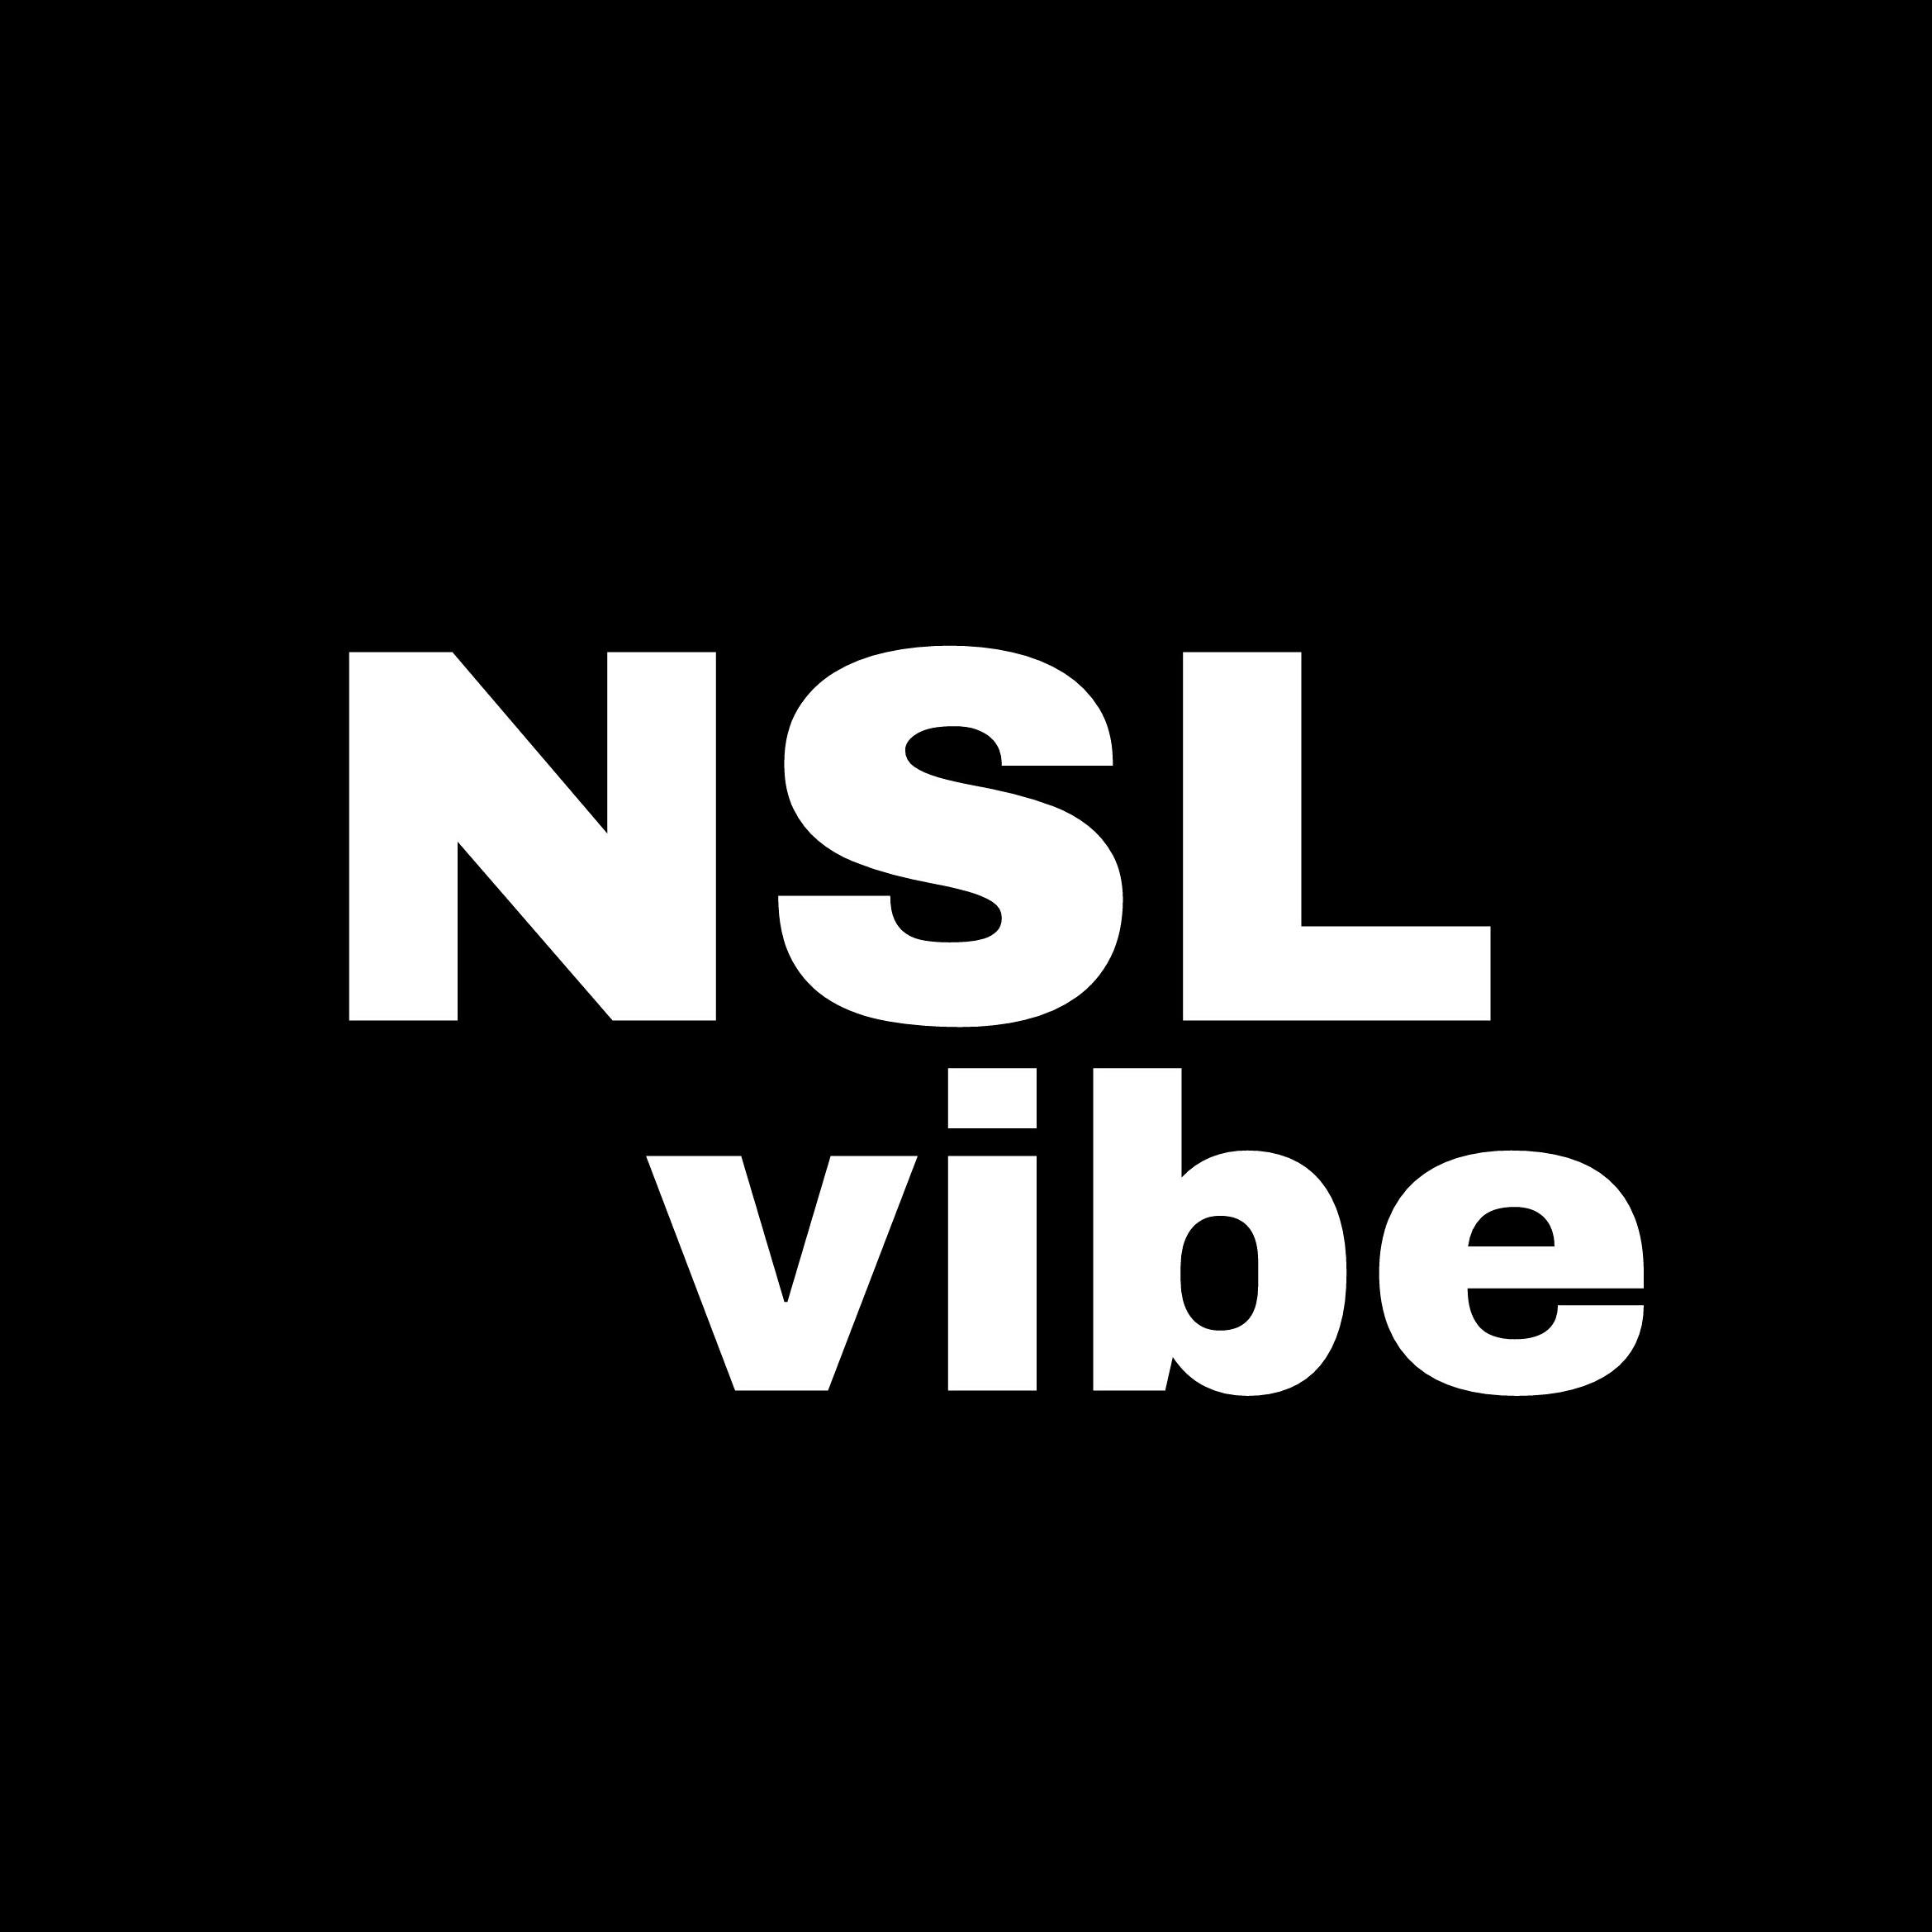 NSL vibe